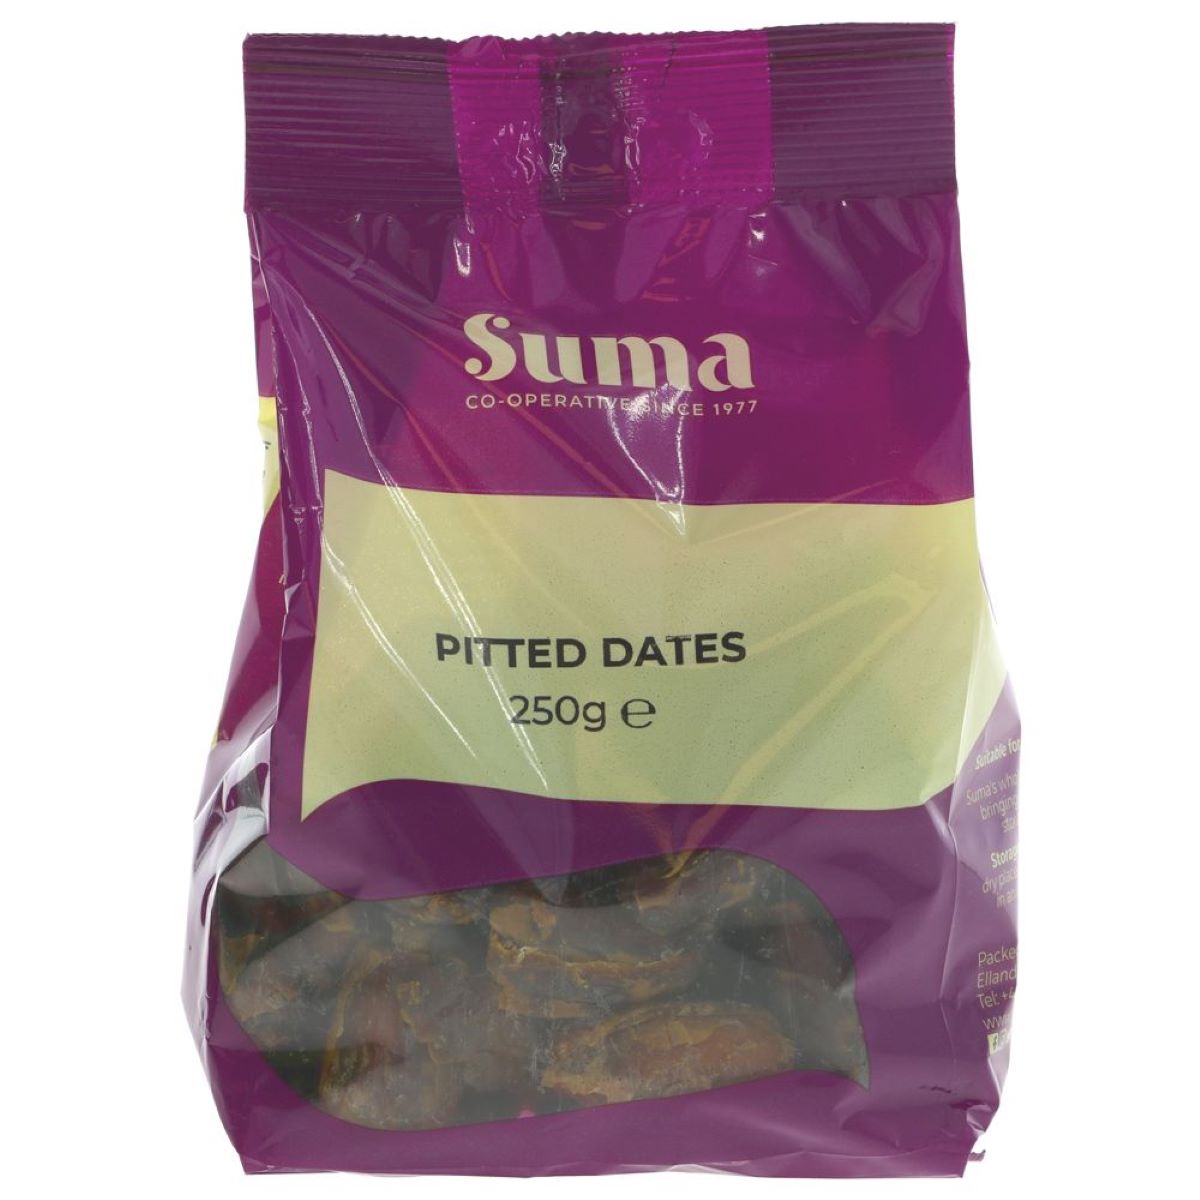 Suma Pitted Dates 250g